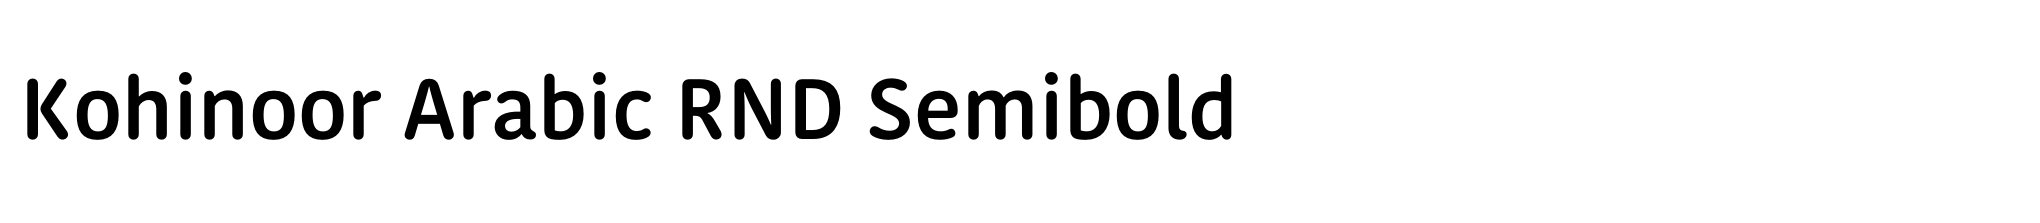 Kohinoor Arabic RND Semibold image